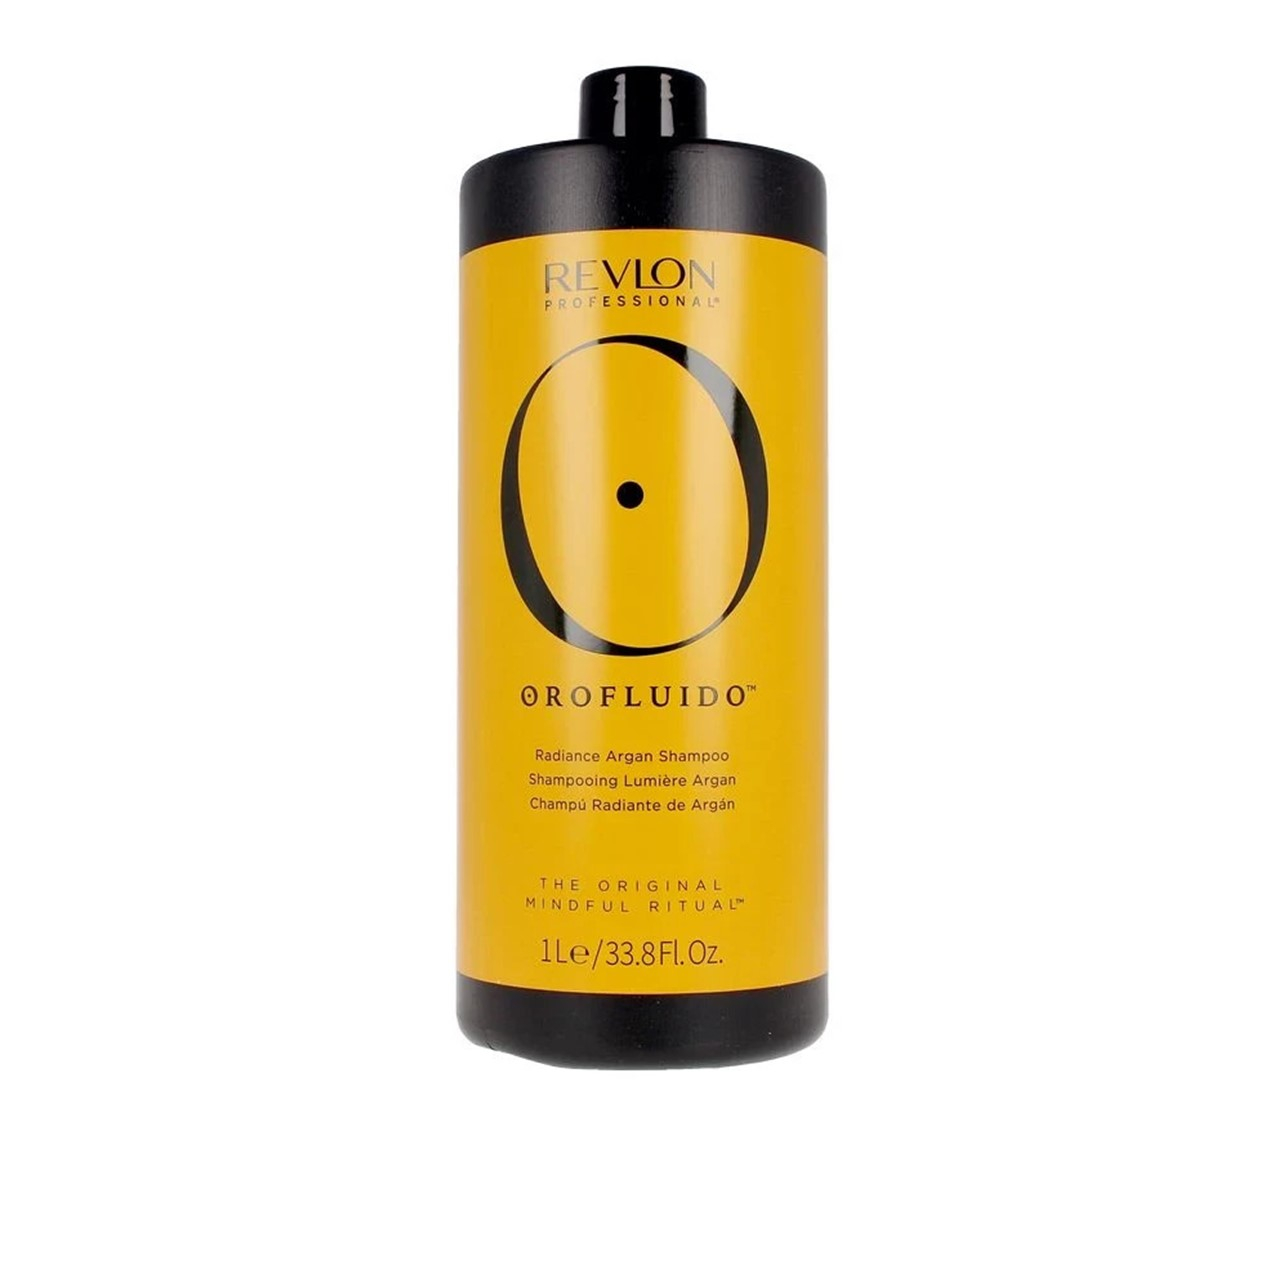 Revlon Professional Orofluido Radiance Argan Shampoo 1L